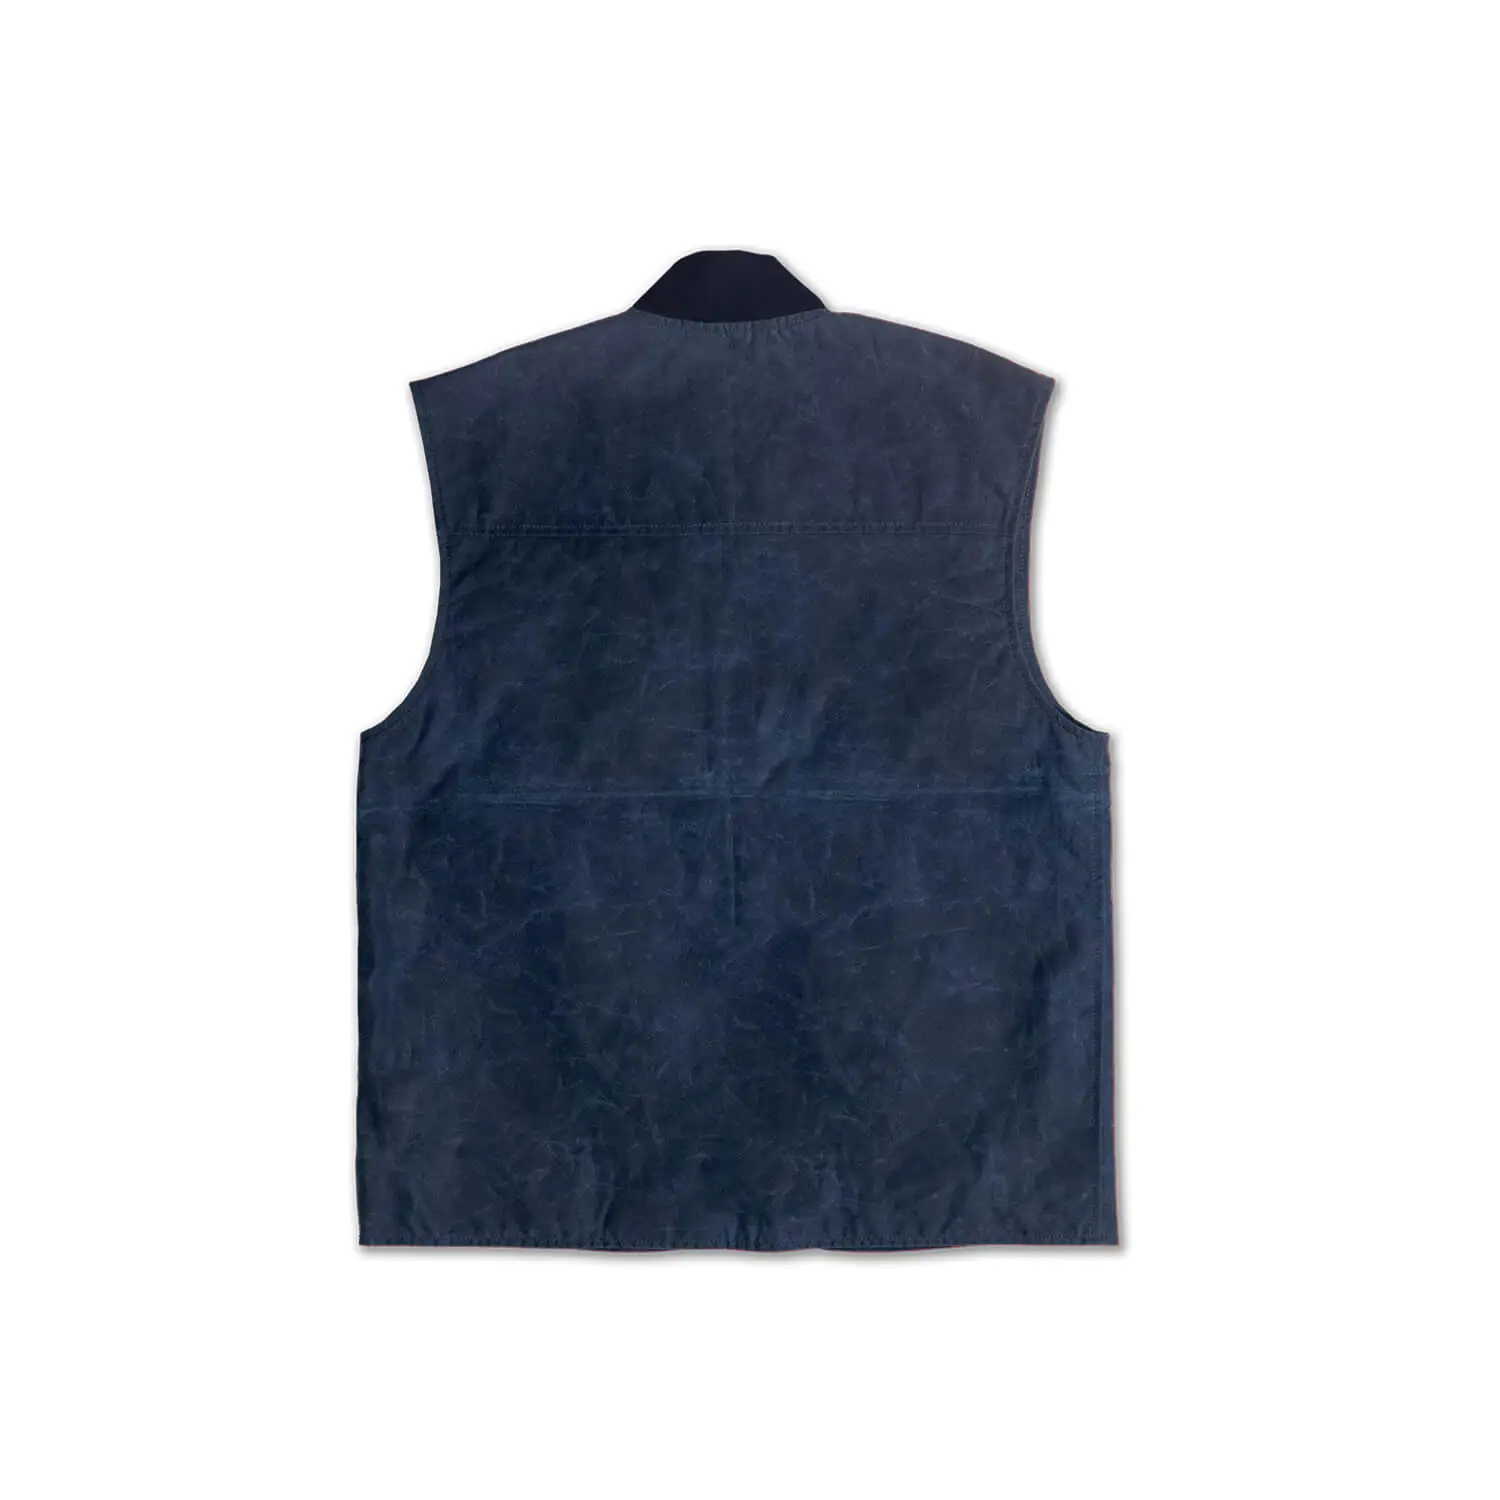 dmd.eu - WESTE BLUE DMD – Gilet blue cotton waxed – back